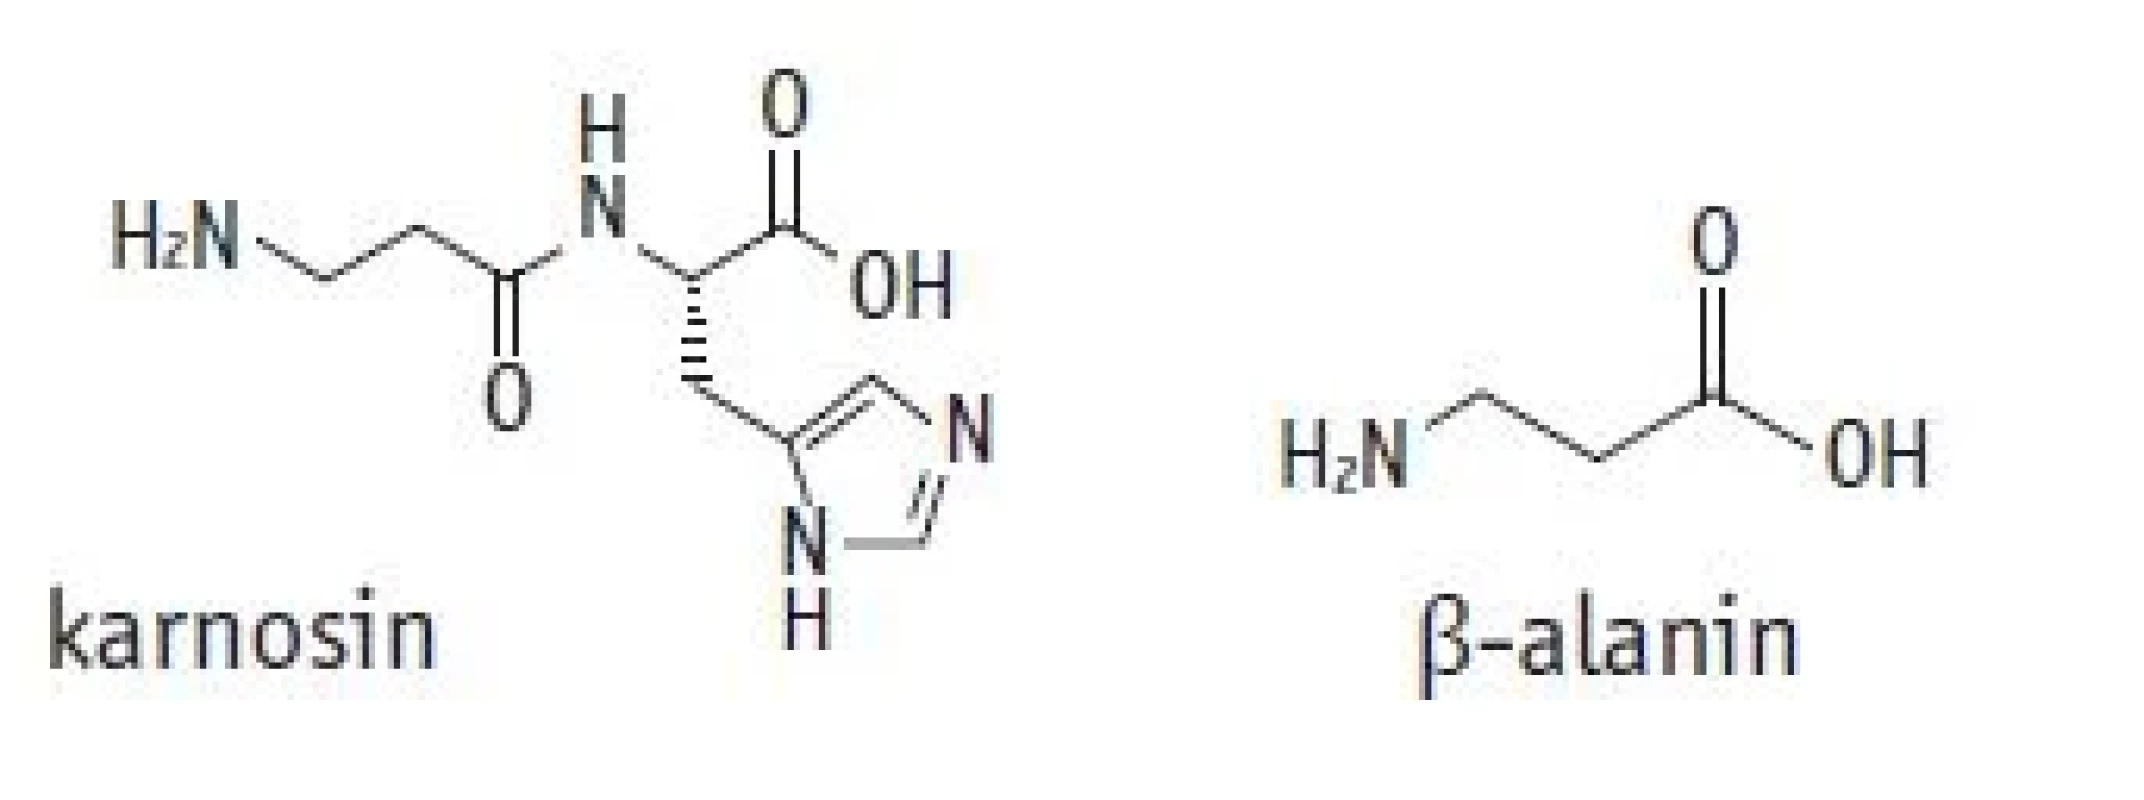 Chemická struktura karnosinu a β-alaninu